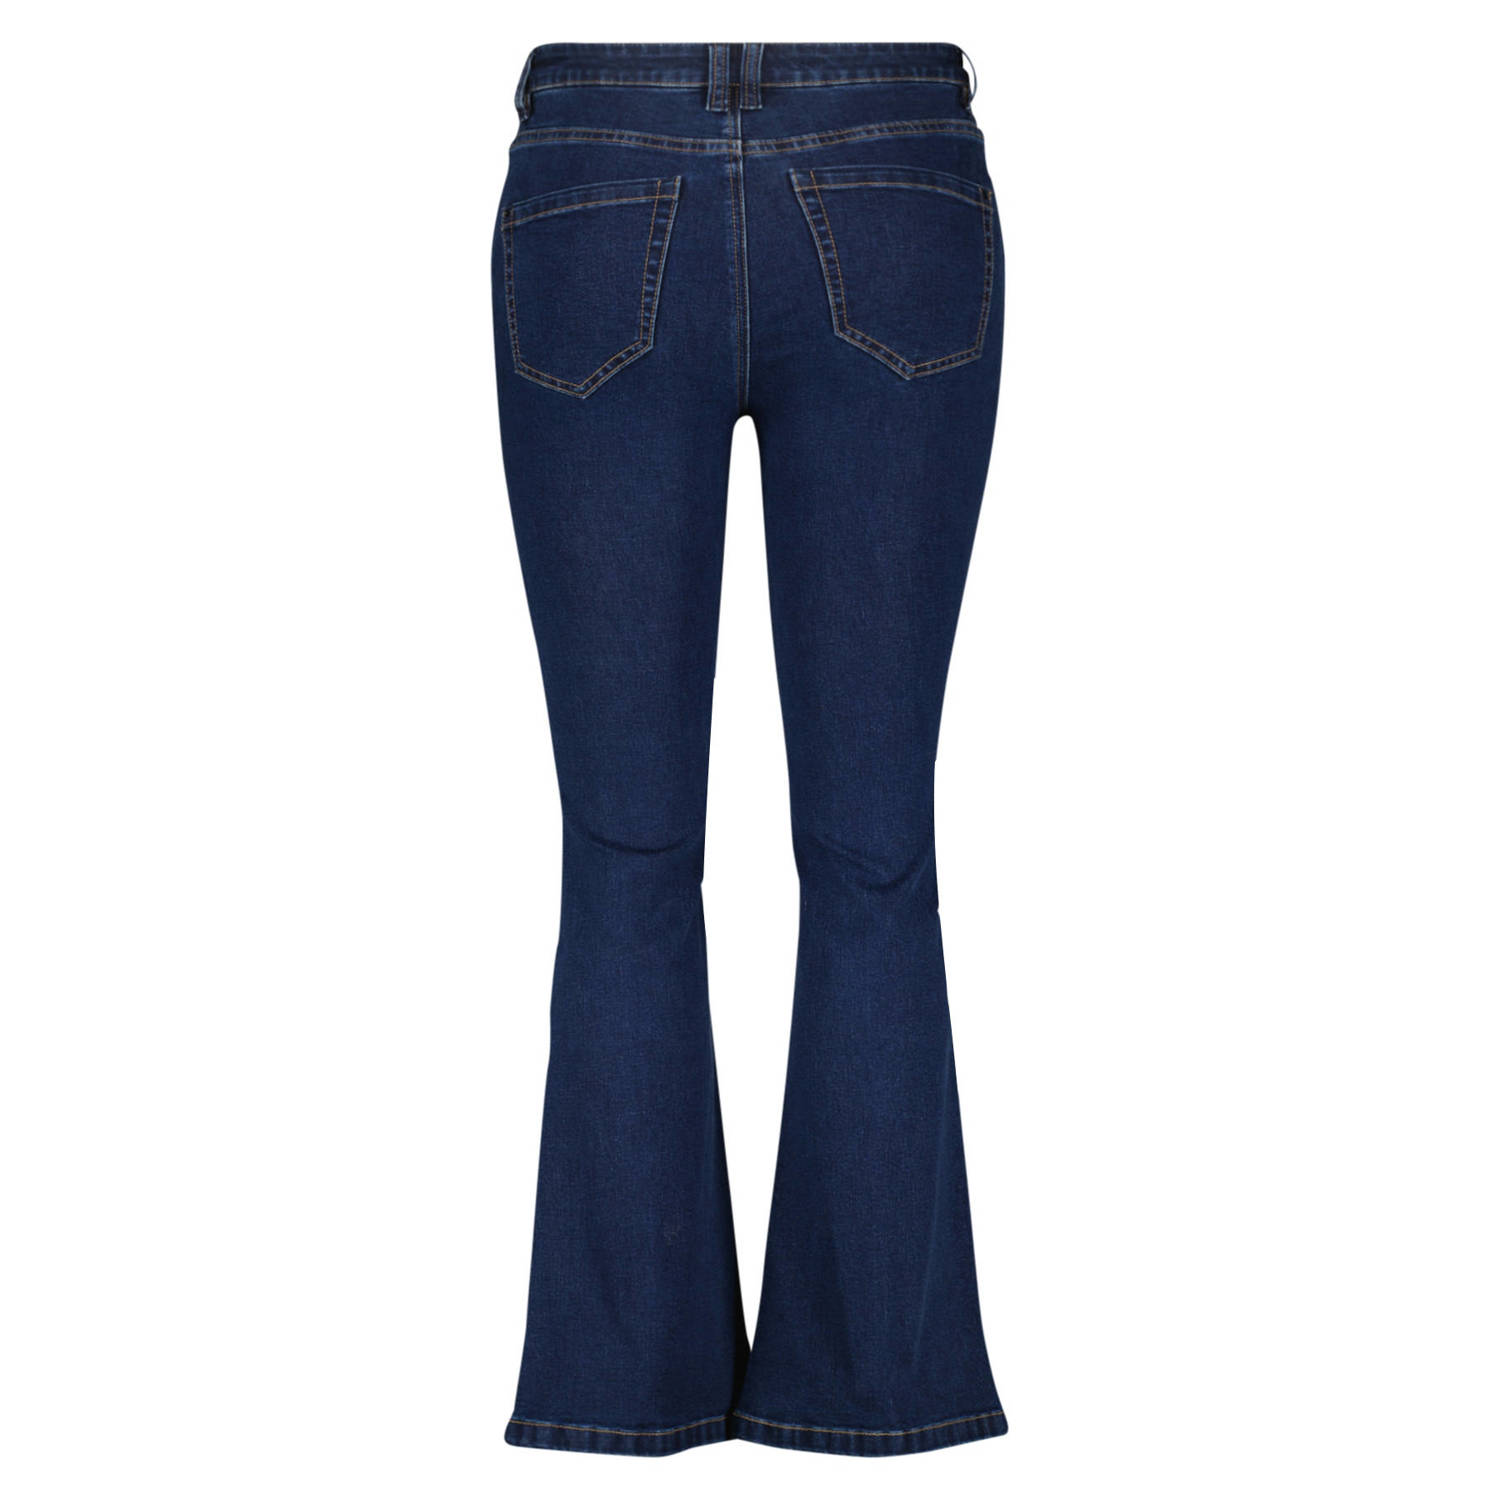 MS Mode flared jeans dark blue denim